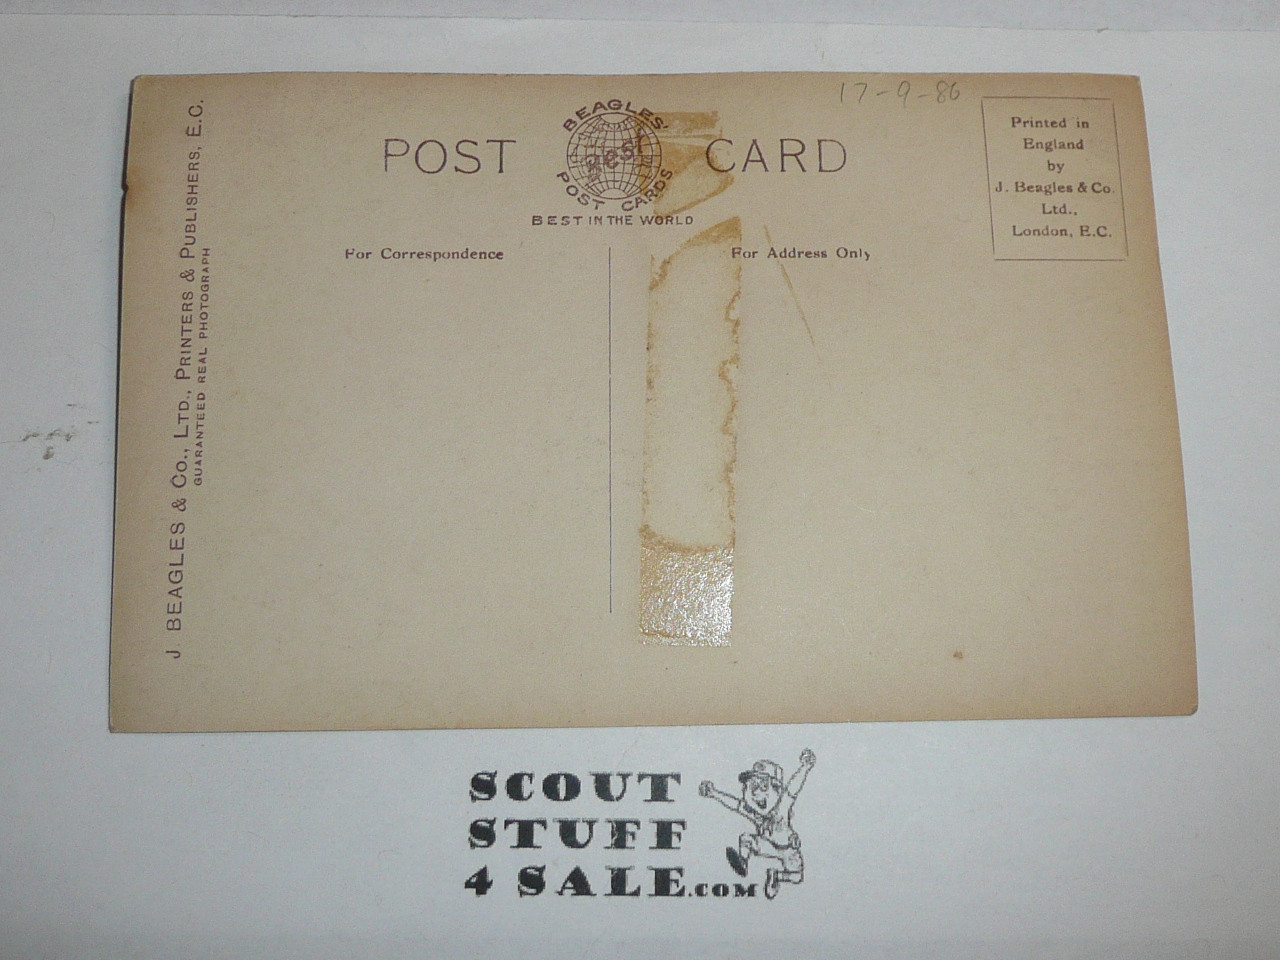 Lt. Gen Sir R. S. S. Baden Powell early Postcard, 1900, UNUSED